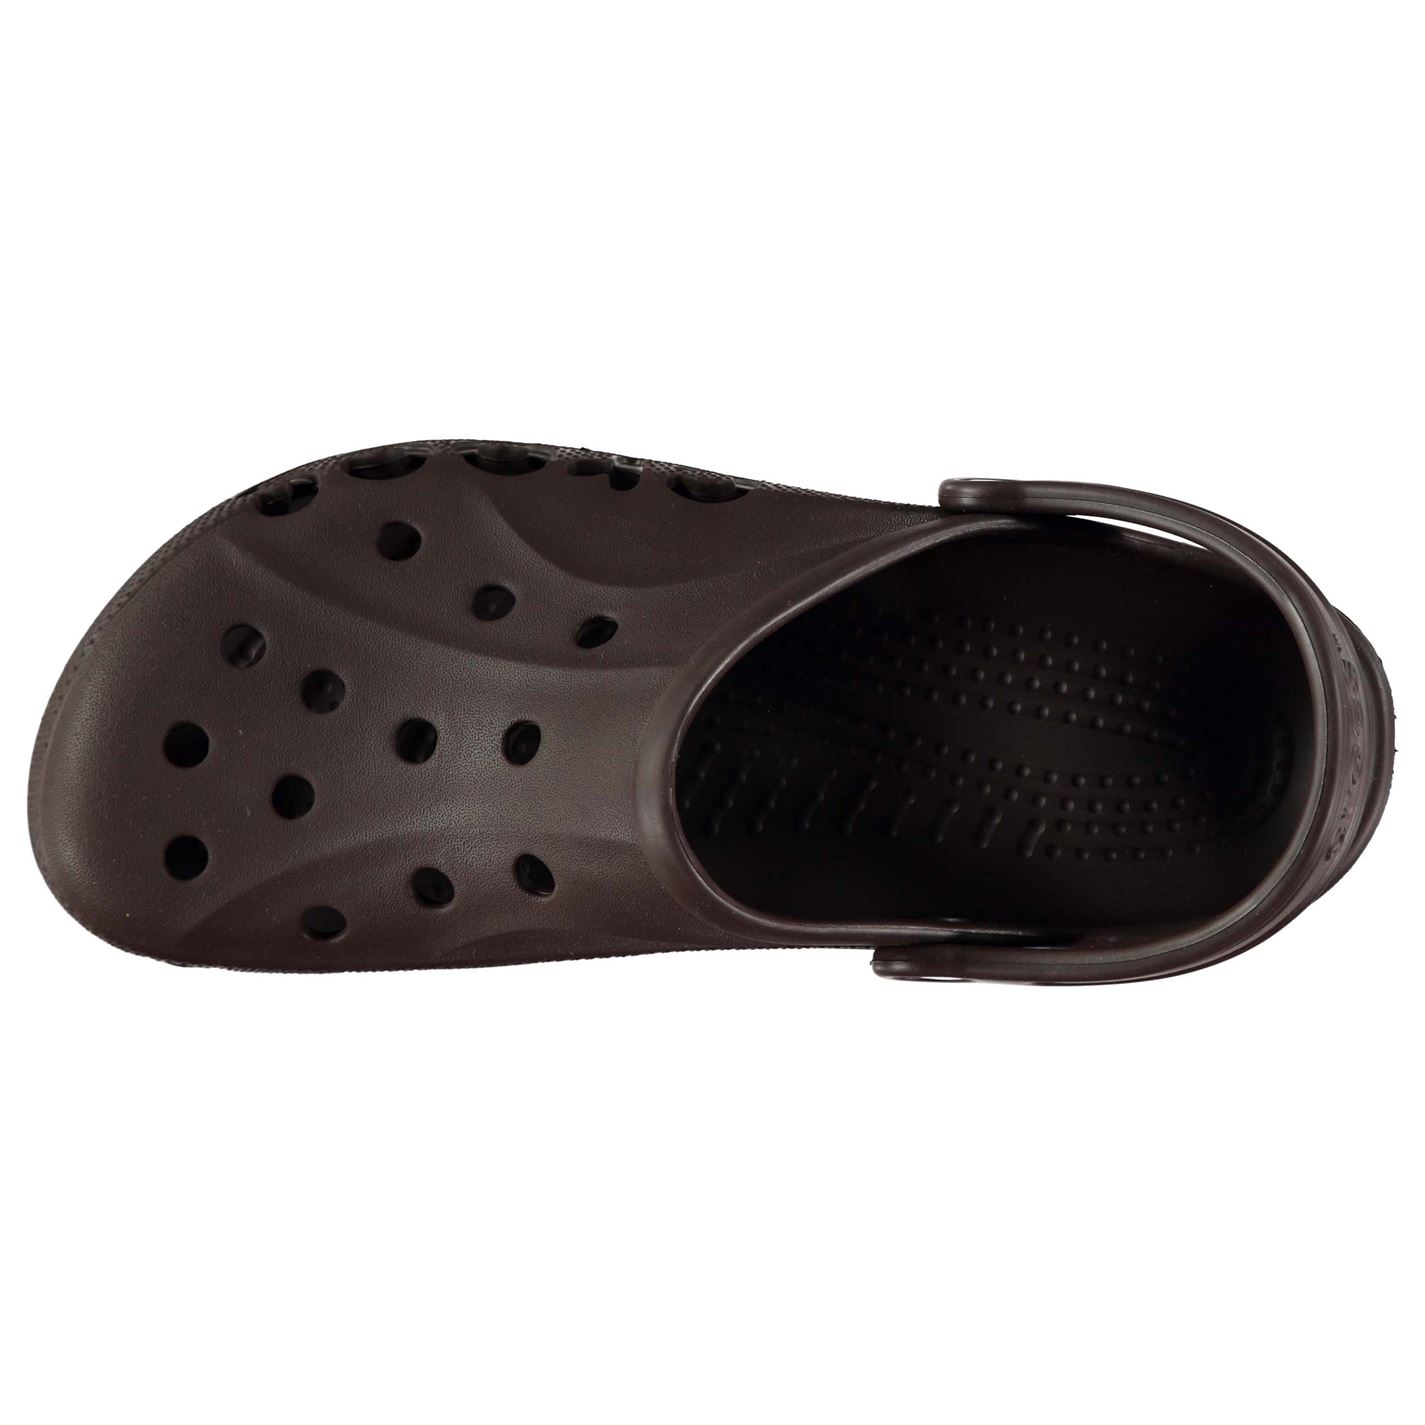 Crocs Mens Gents Baya Clogs Shoes Garden Beach Hospital Casual Footwear ...